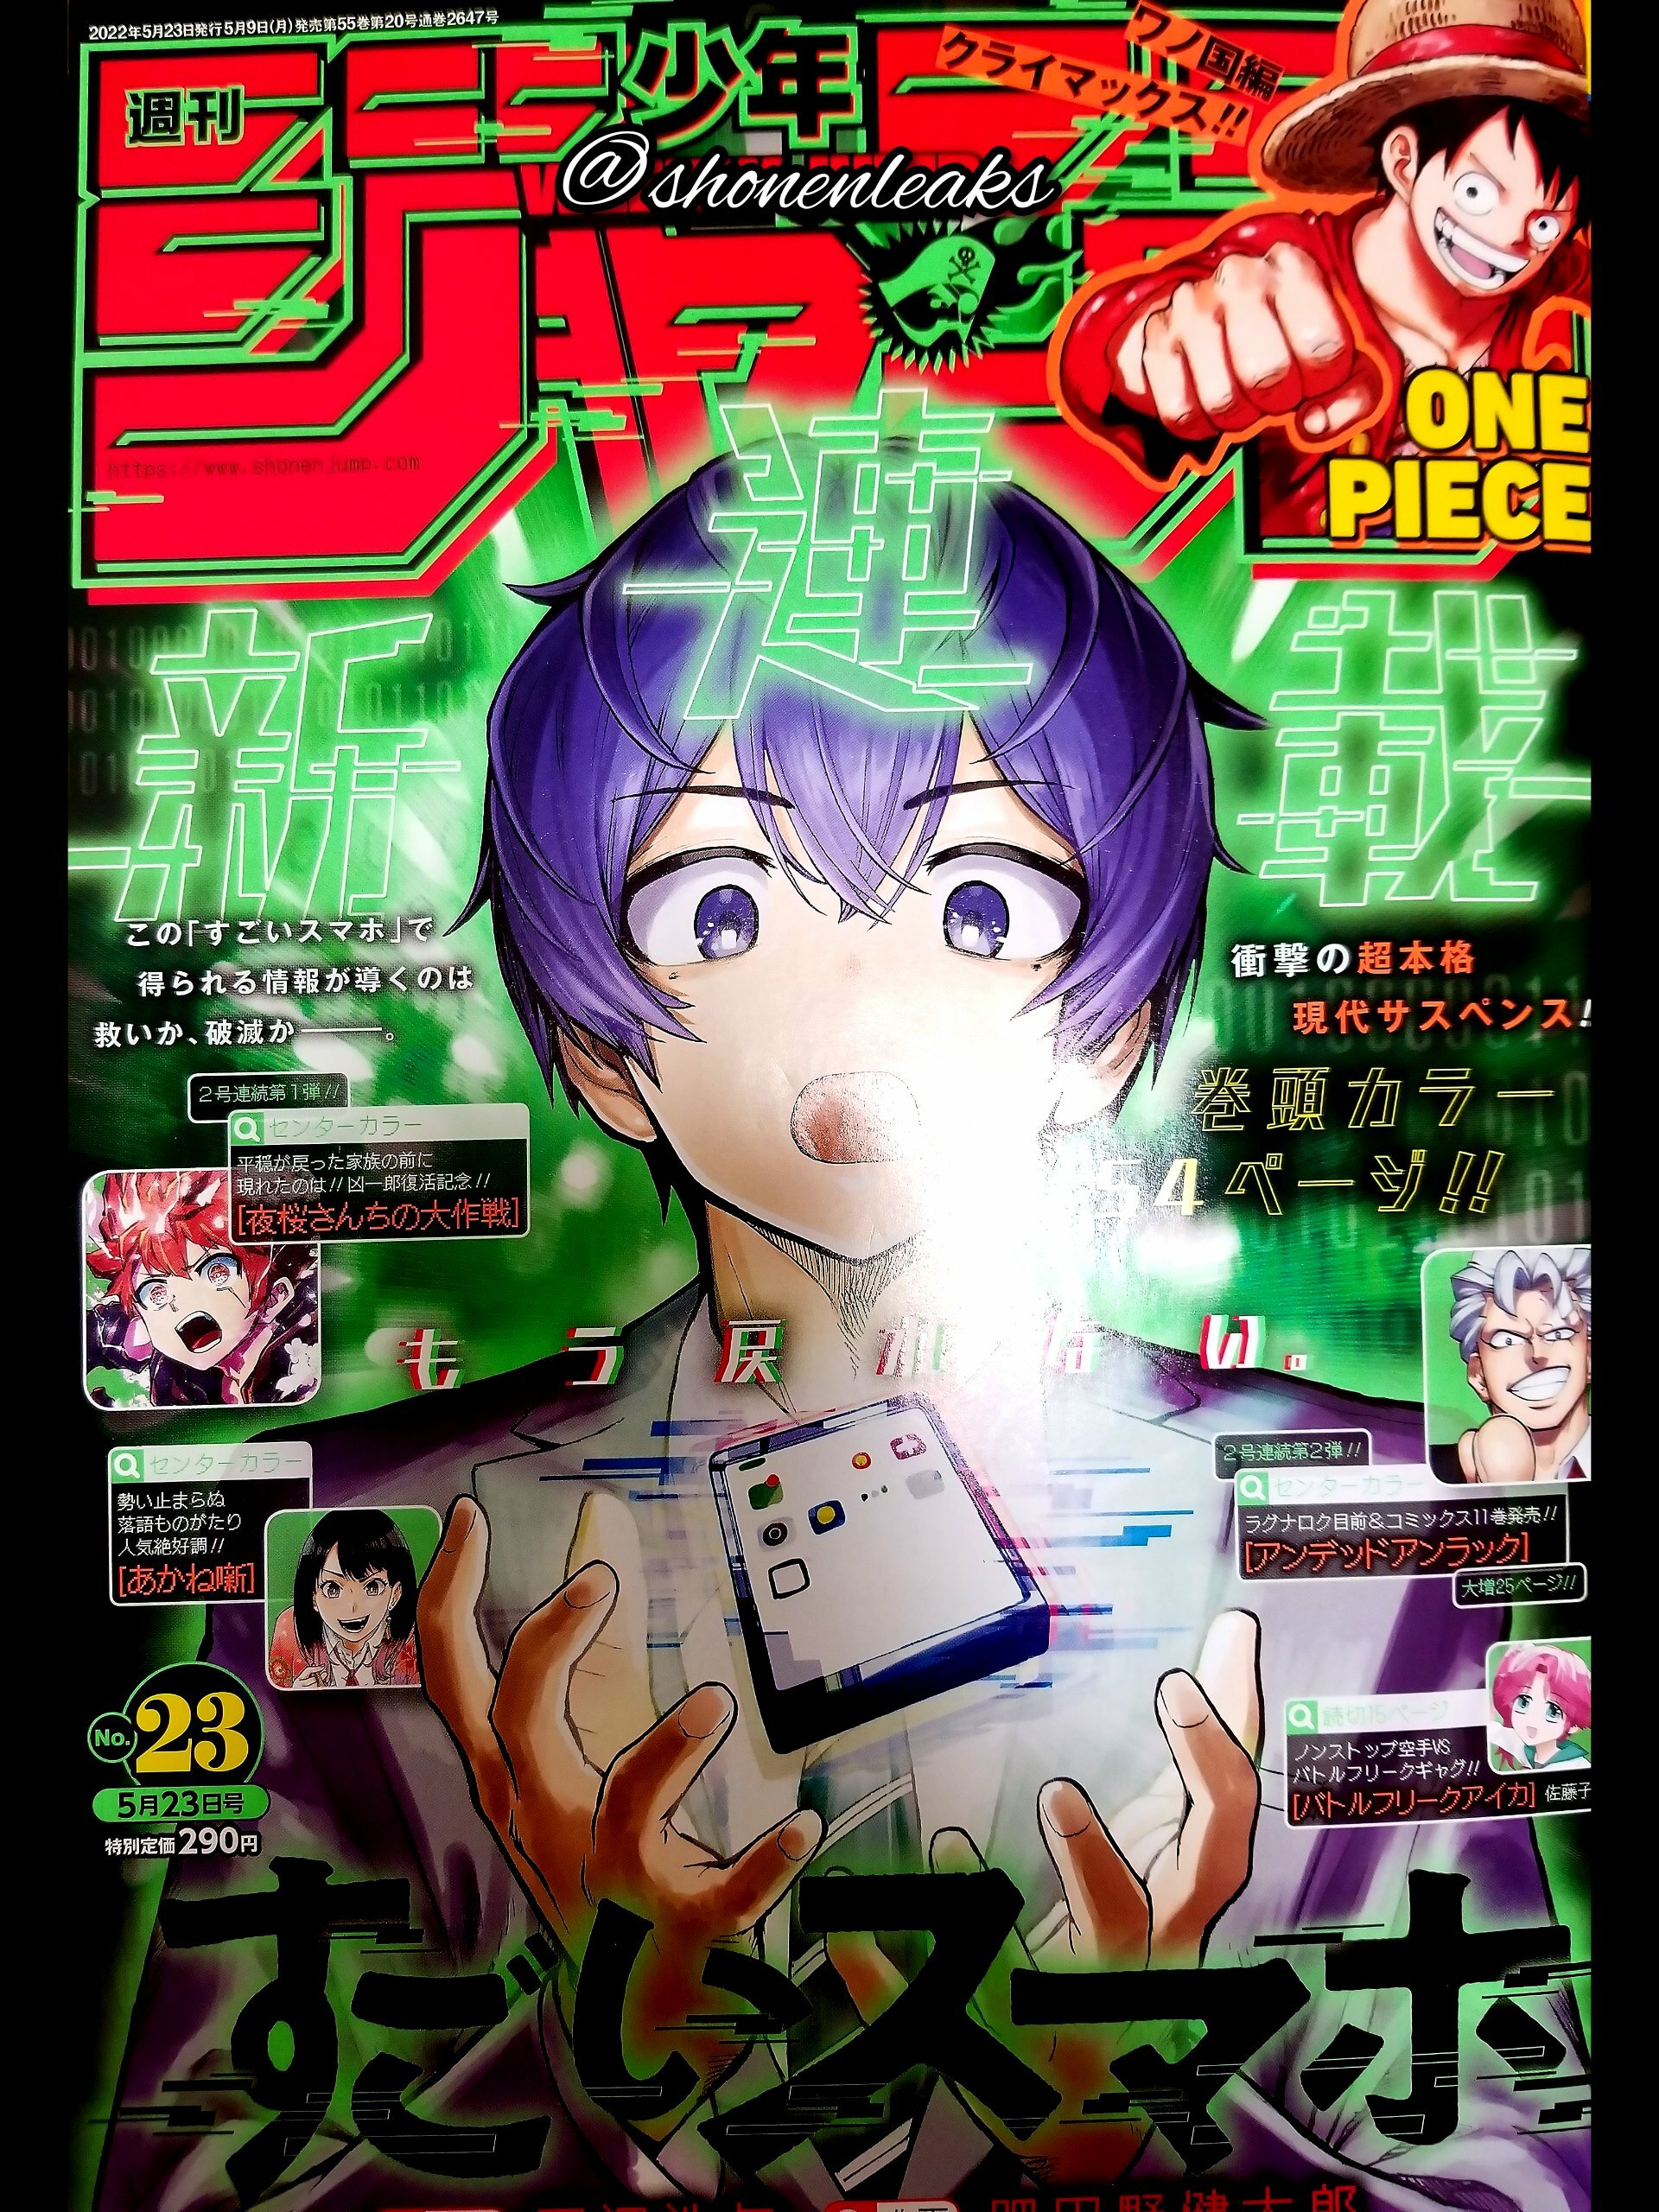 Shinuki no Reborn: Weekly Shonen Jump #17 de 2020